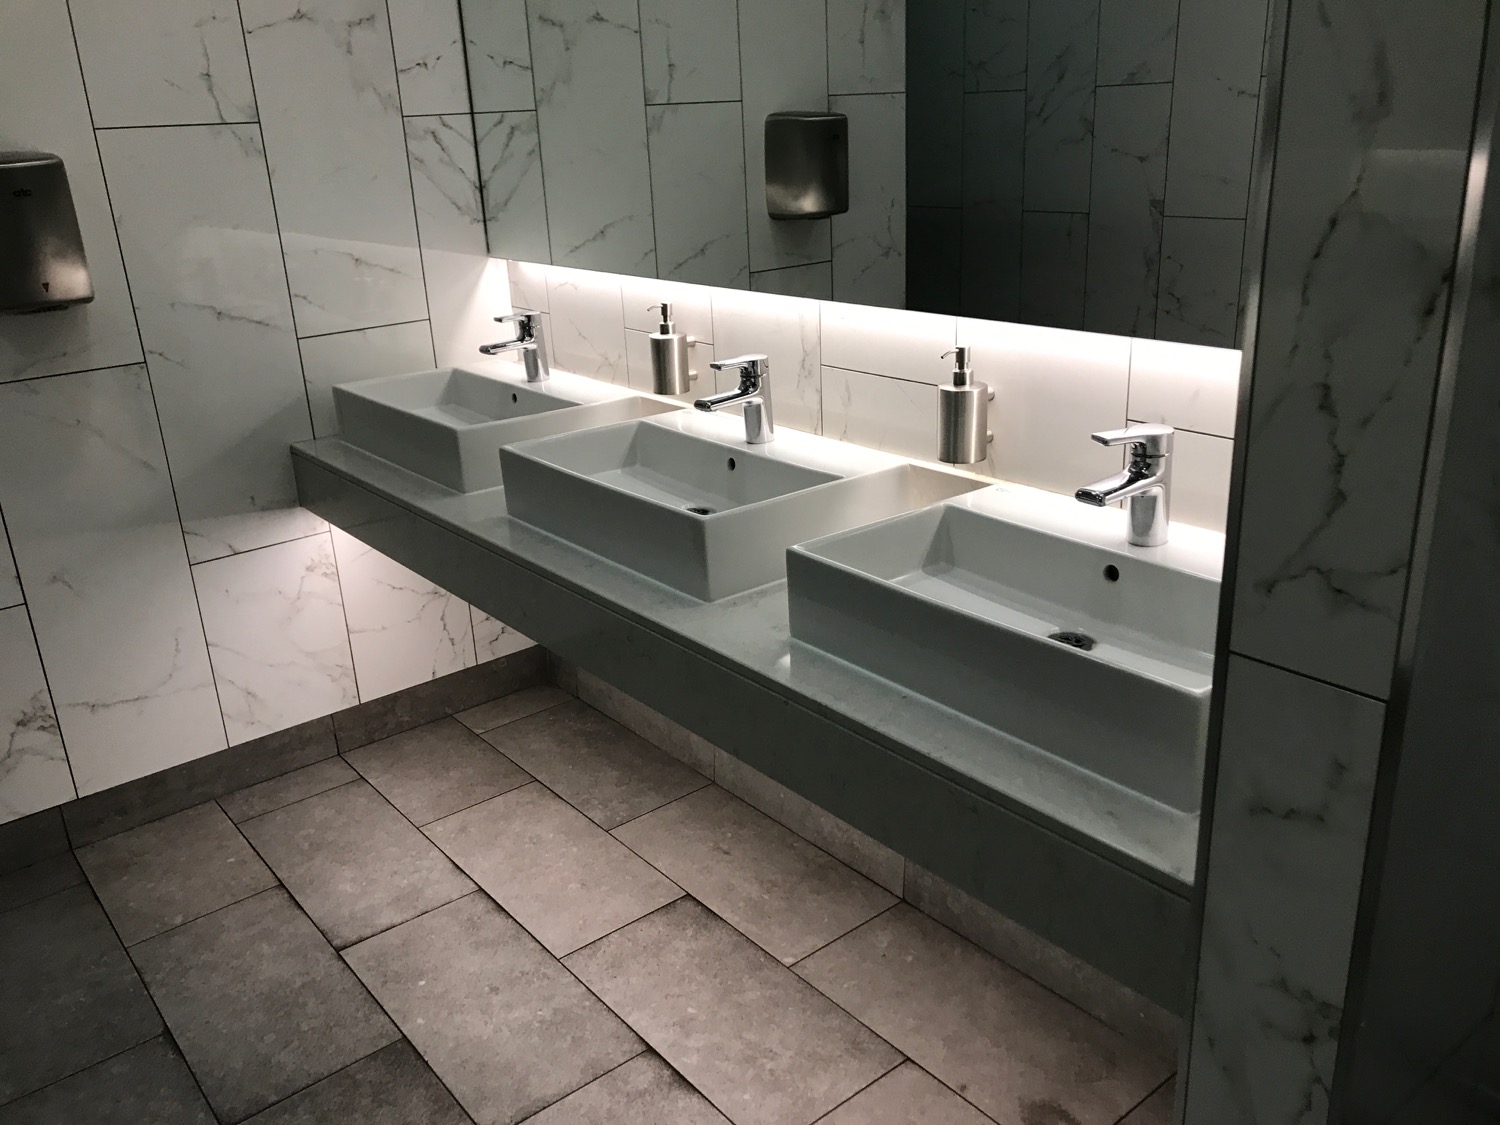 a row of sinks in a bathroom